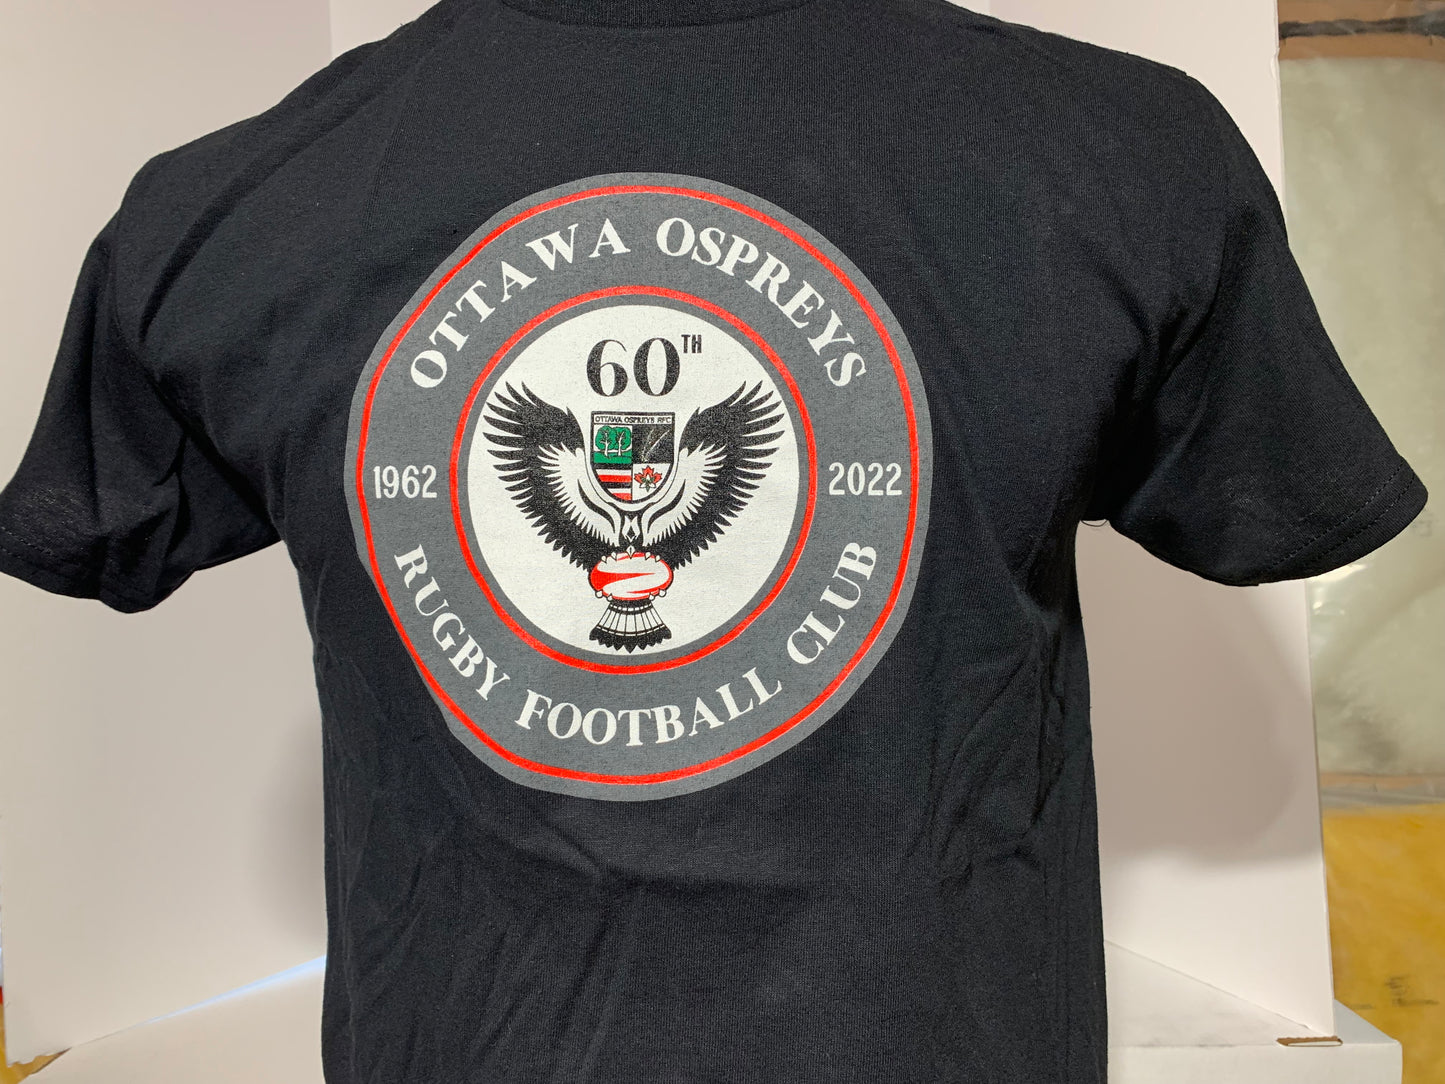 Ospreys 60th Anniversary T-shirts